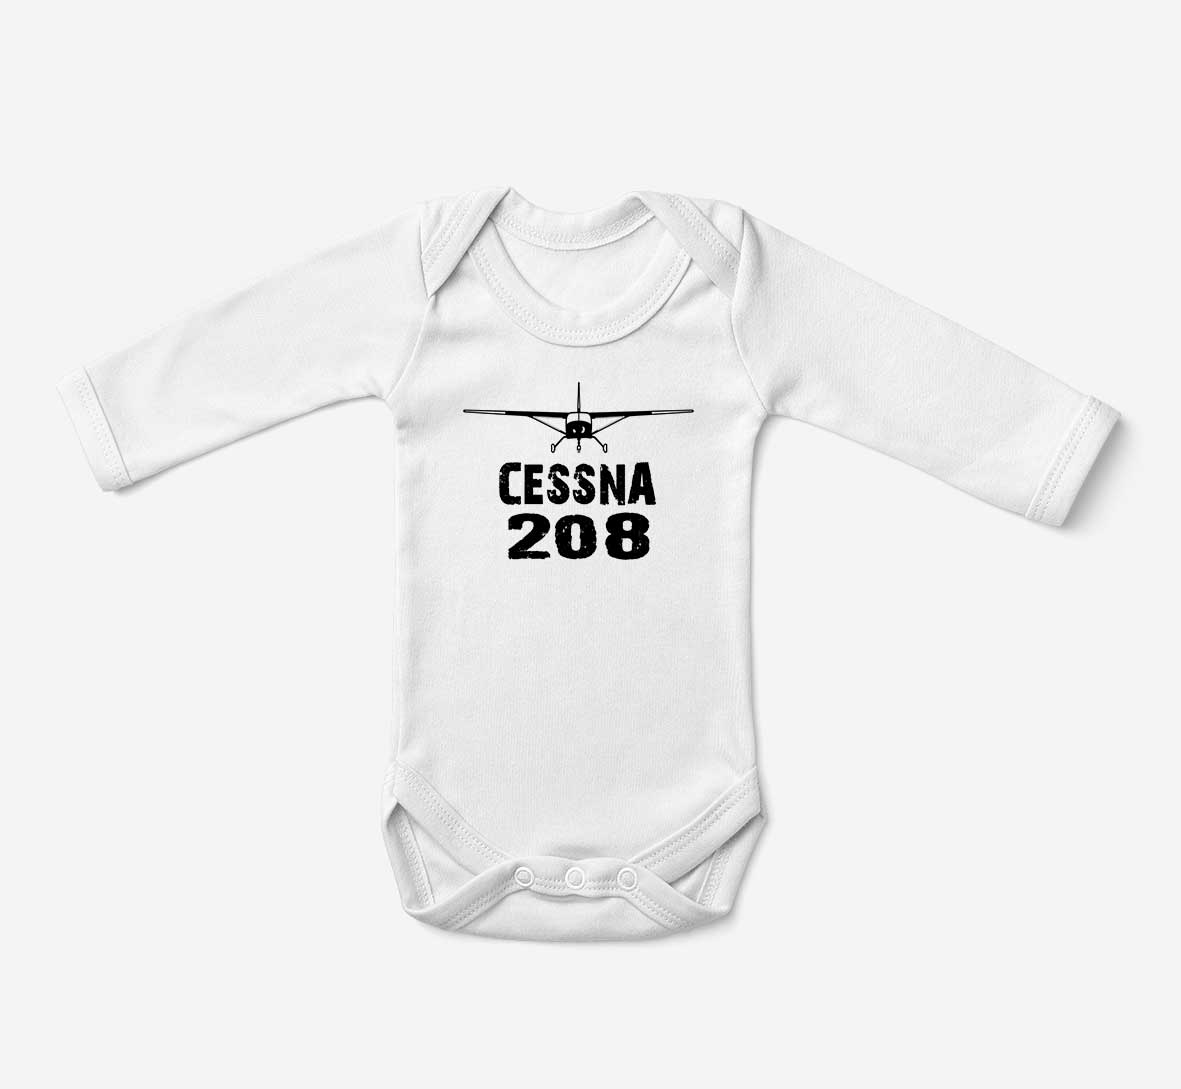 Cessna 208 & Plane Designed Baby Bodysuits